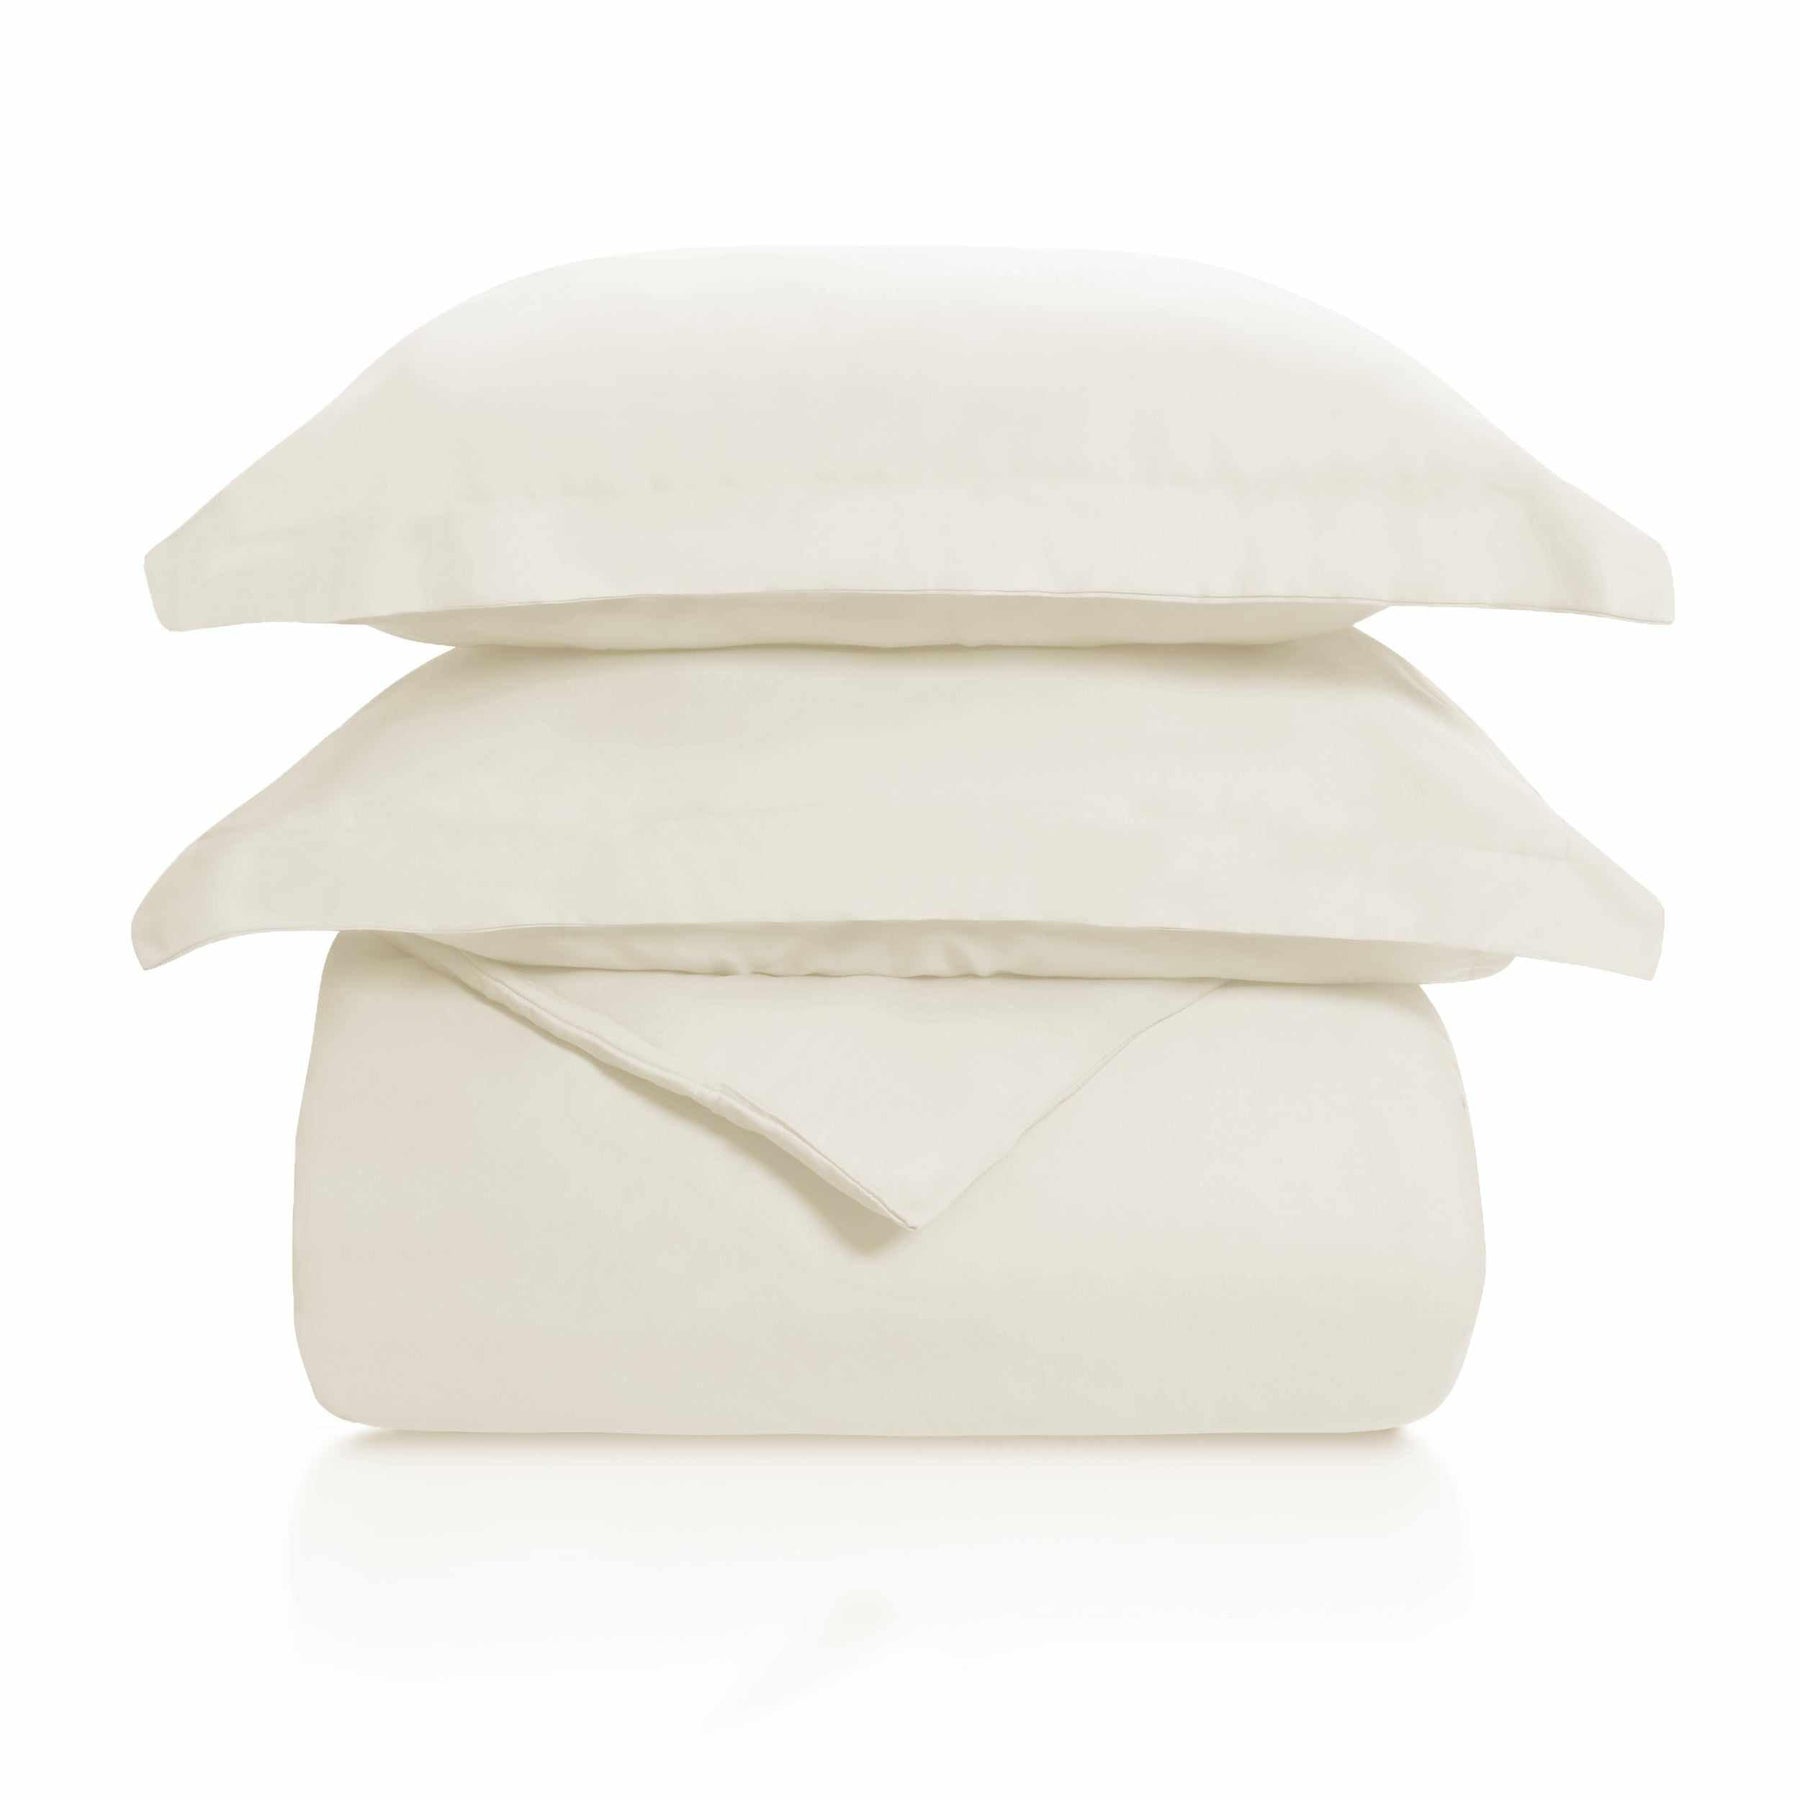  Superior Wrinkle Resistant Cotton Duvet Cover Set - Ivory